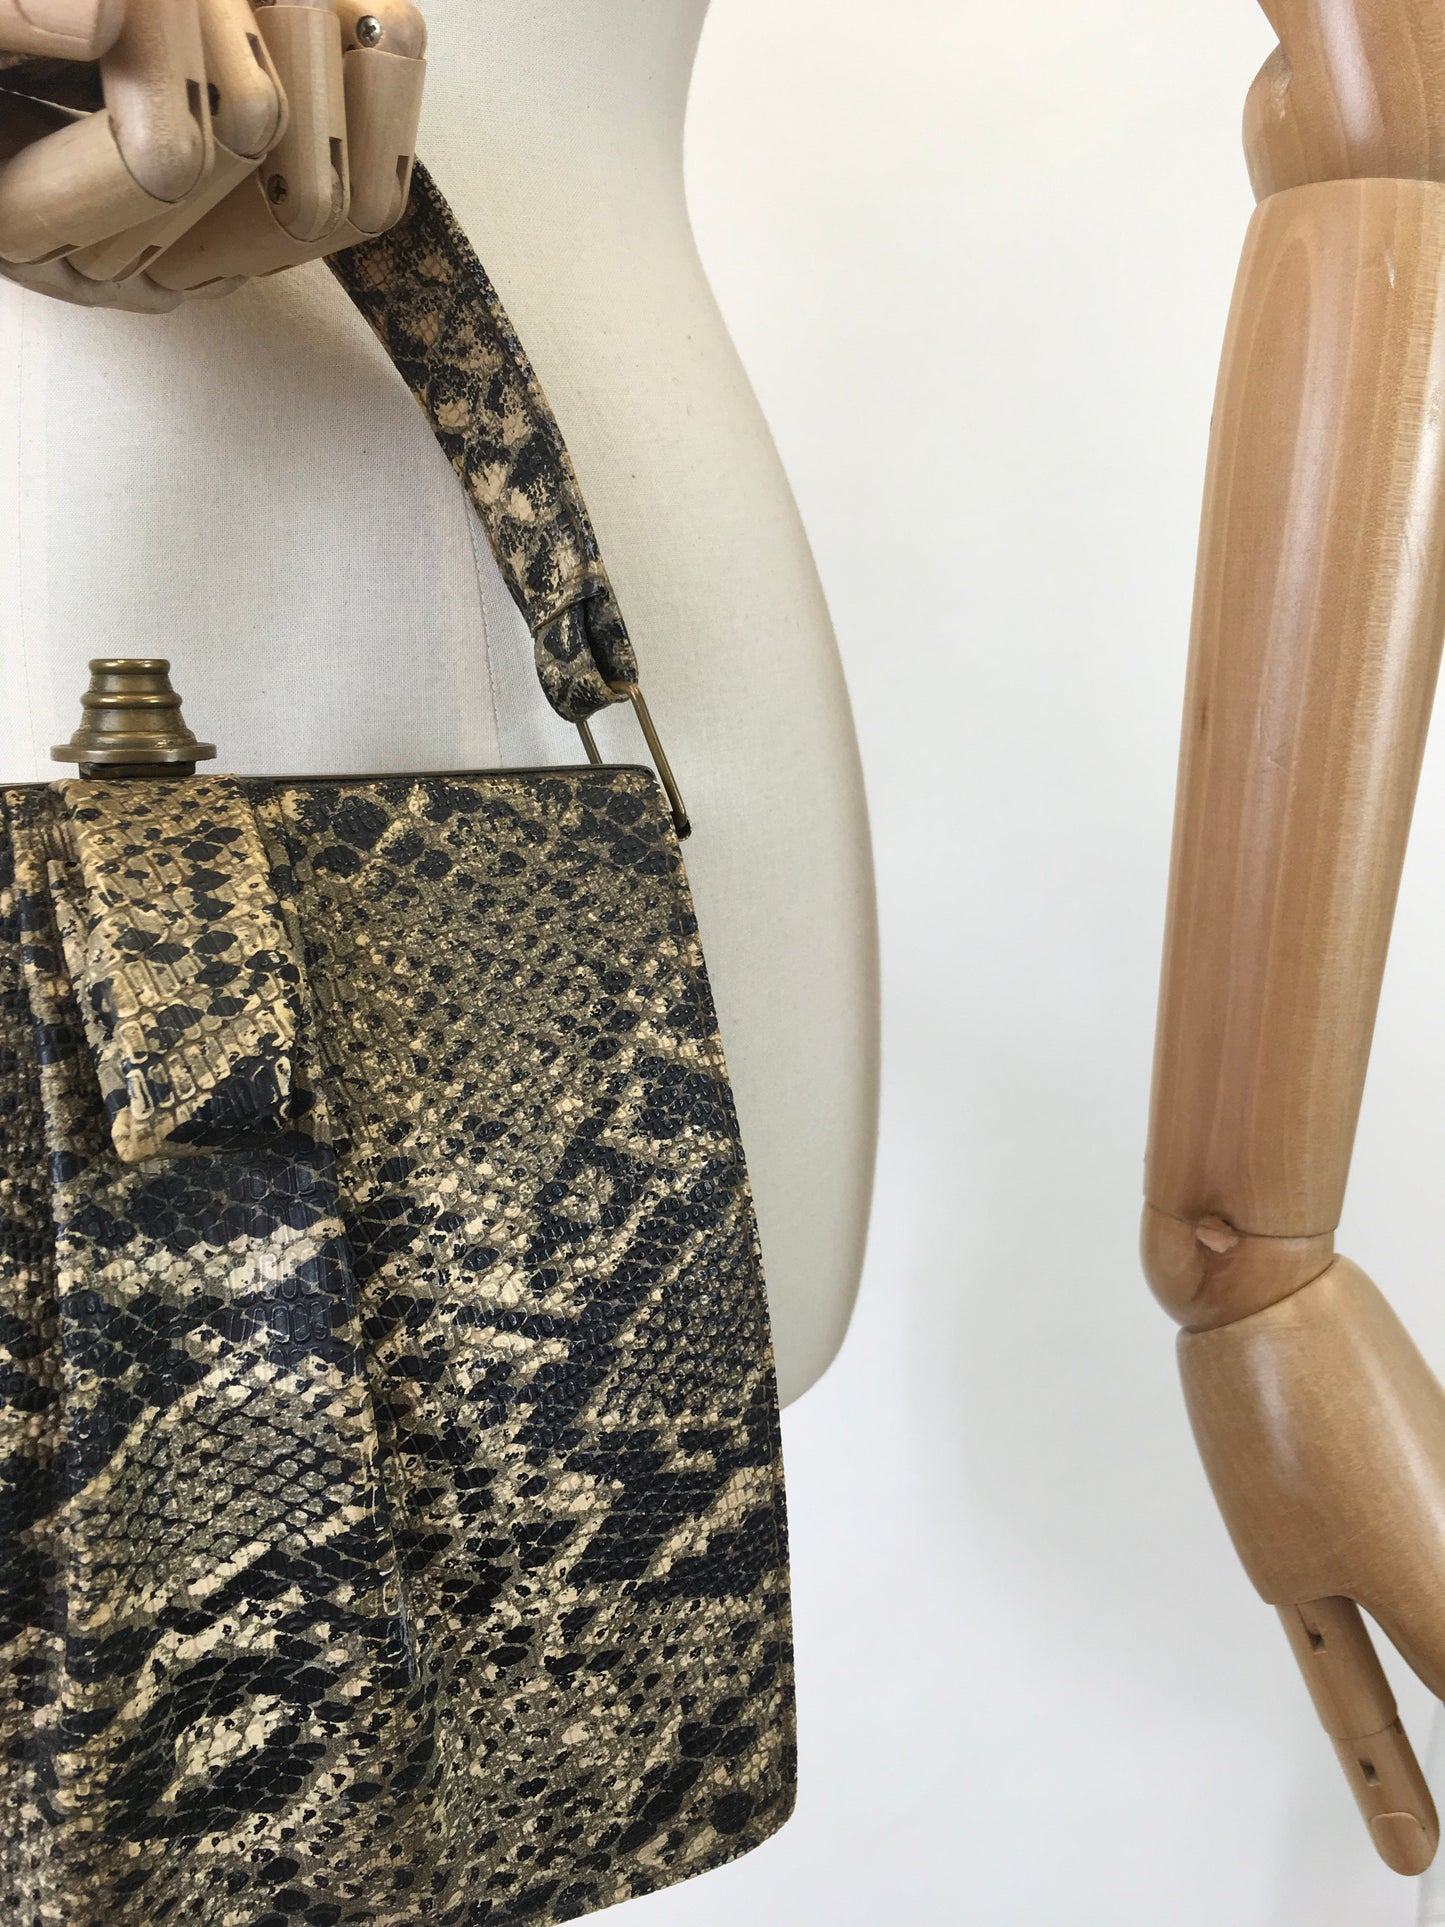 Original 1940's Sensational Snakes Skin Handbag - With Gold Details